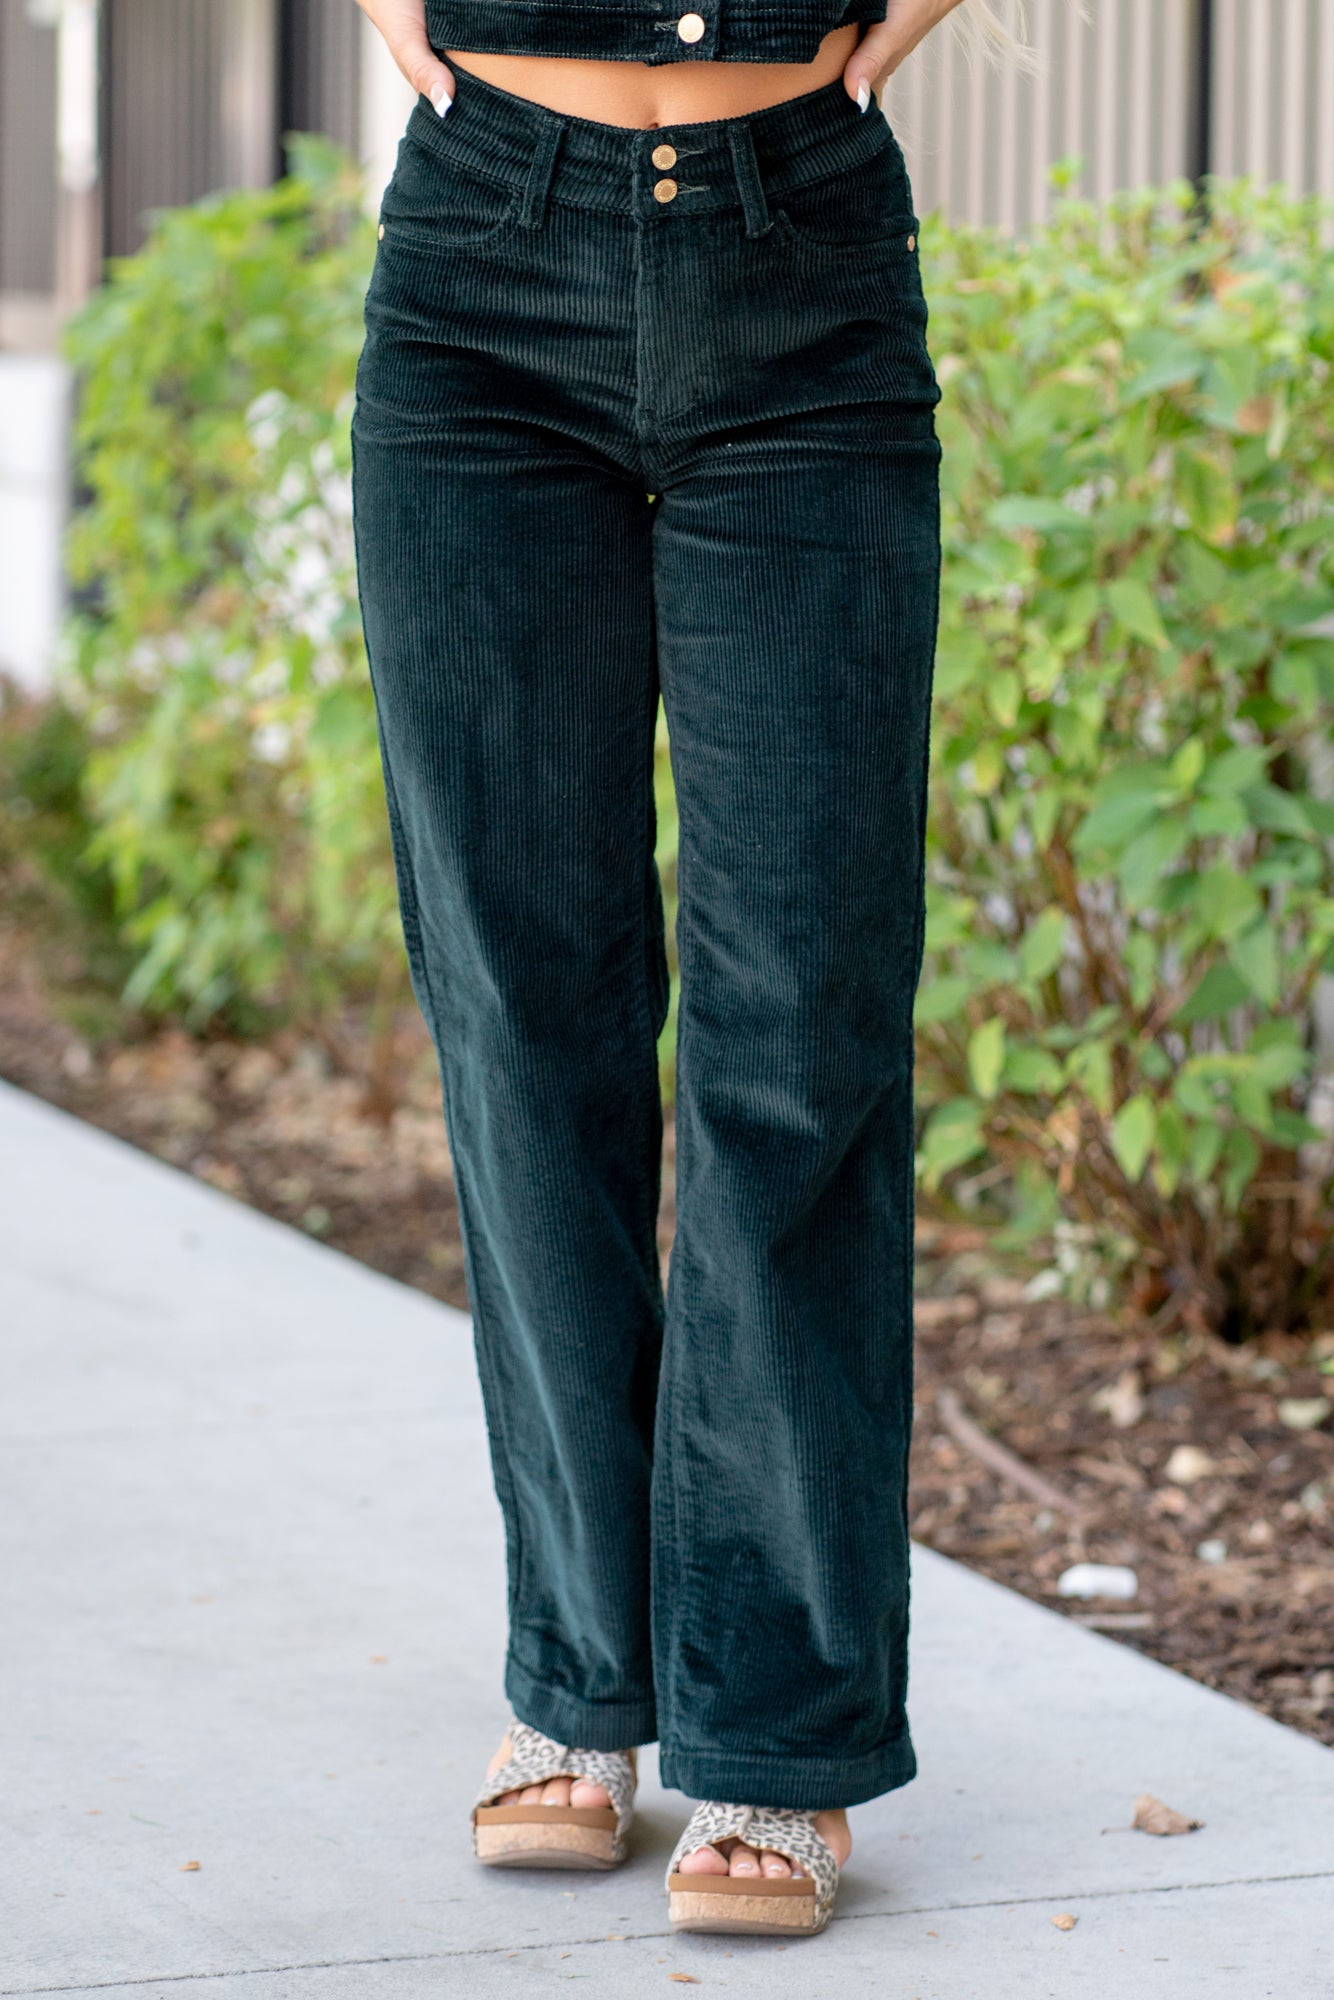 Judy Blue Jeans  Emerald Green Corduroy High Rise Wide Leg